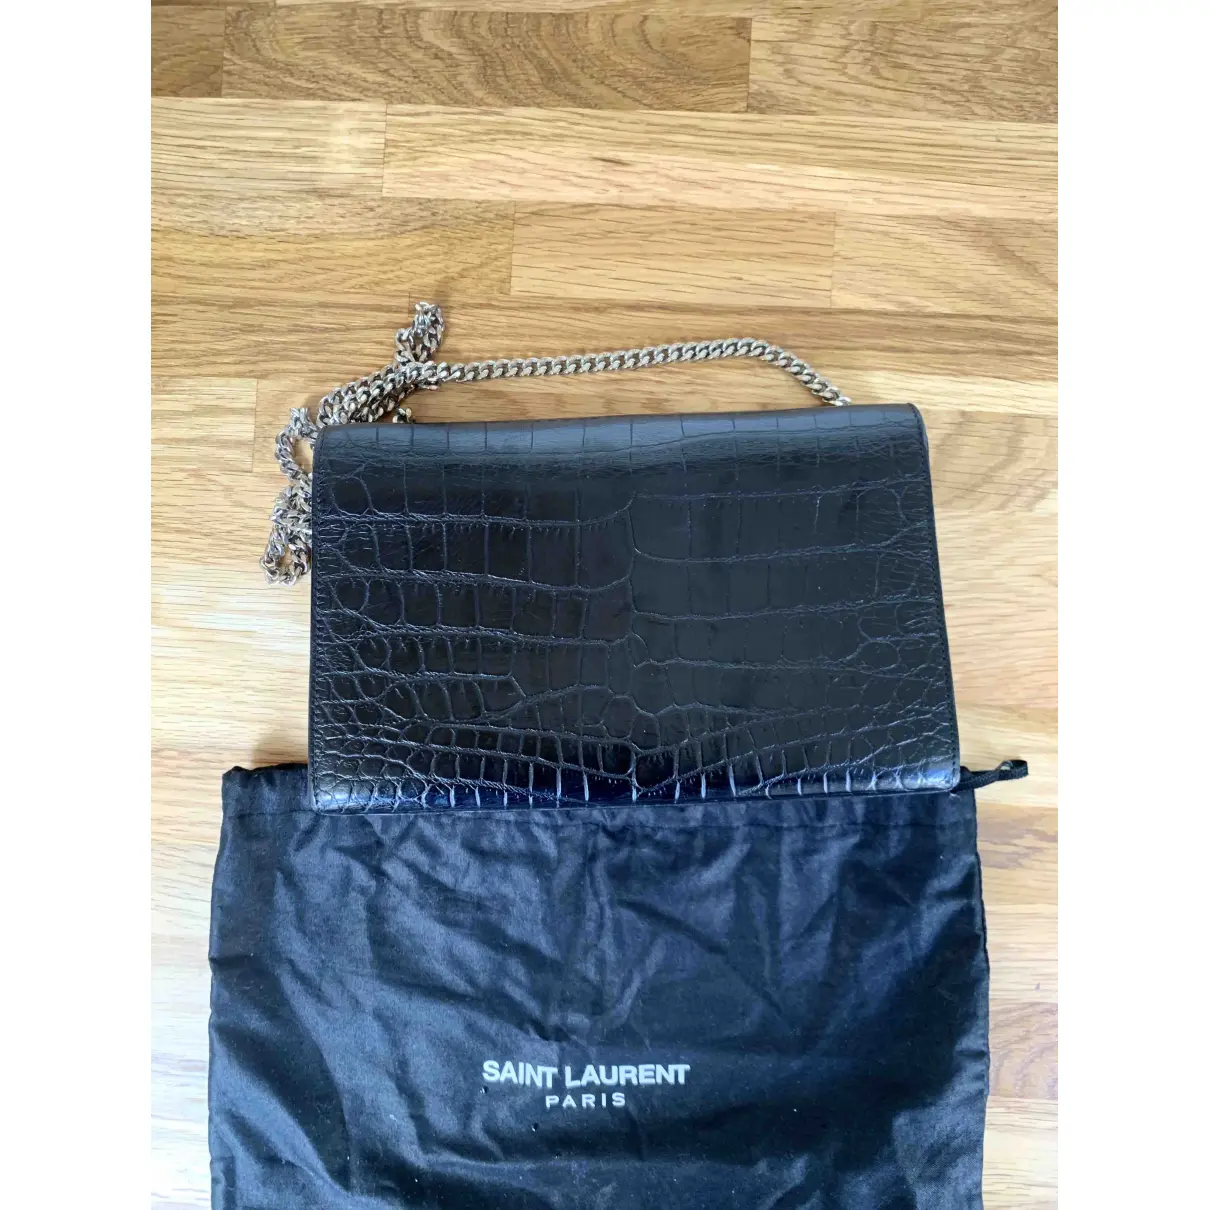 Buy Saint Laurent Kate monogramme leather crossbody bag online